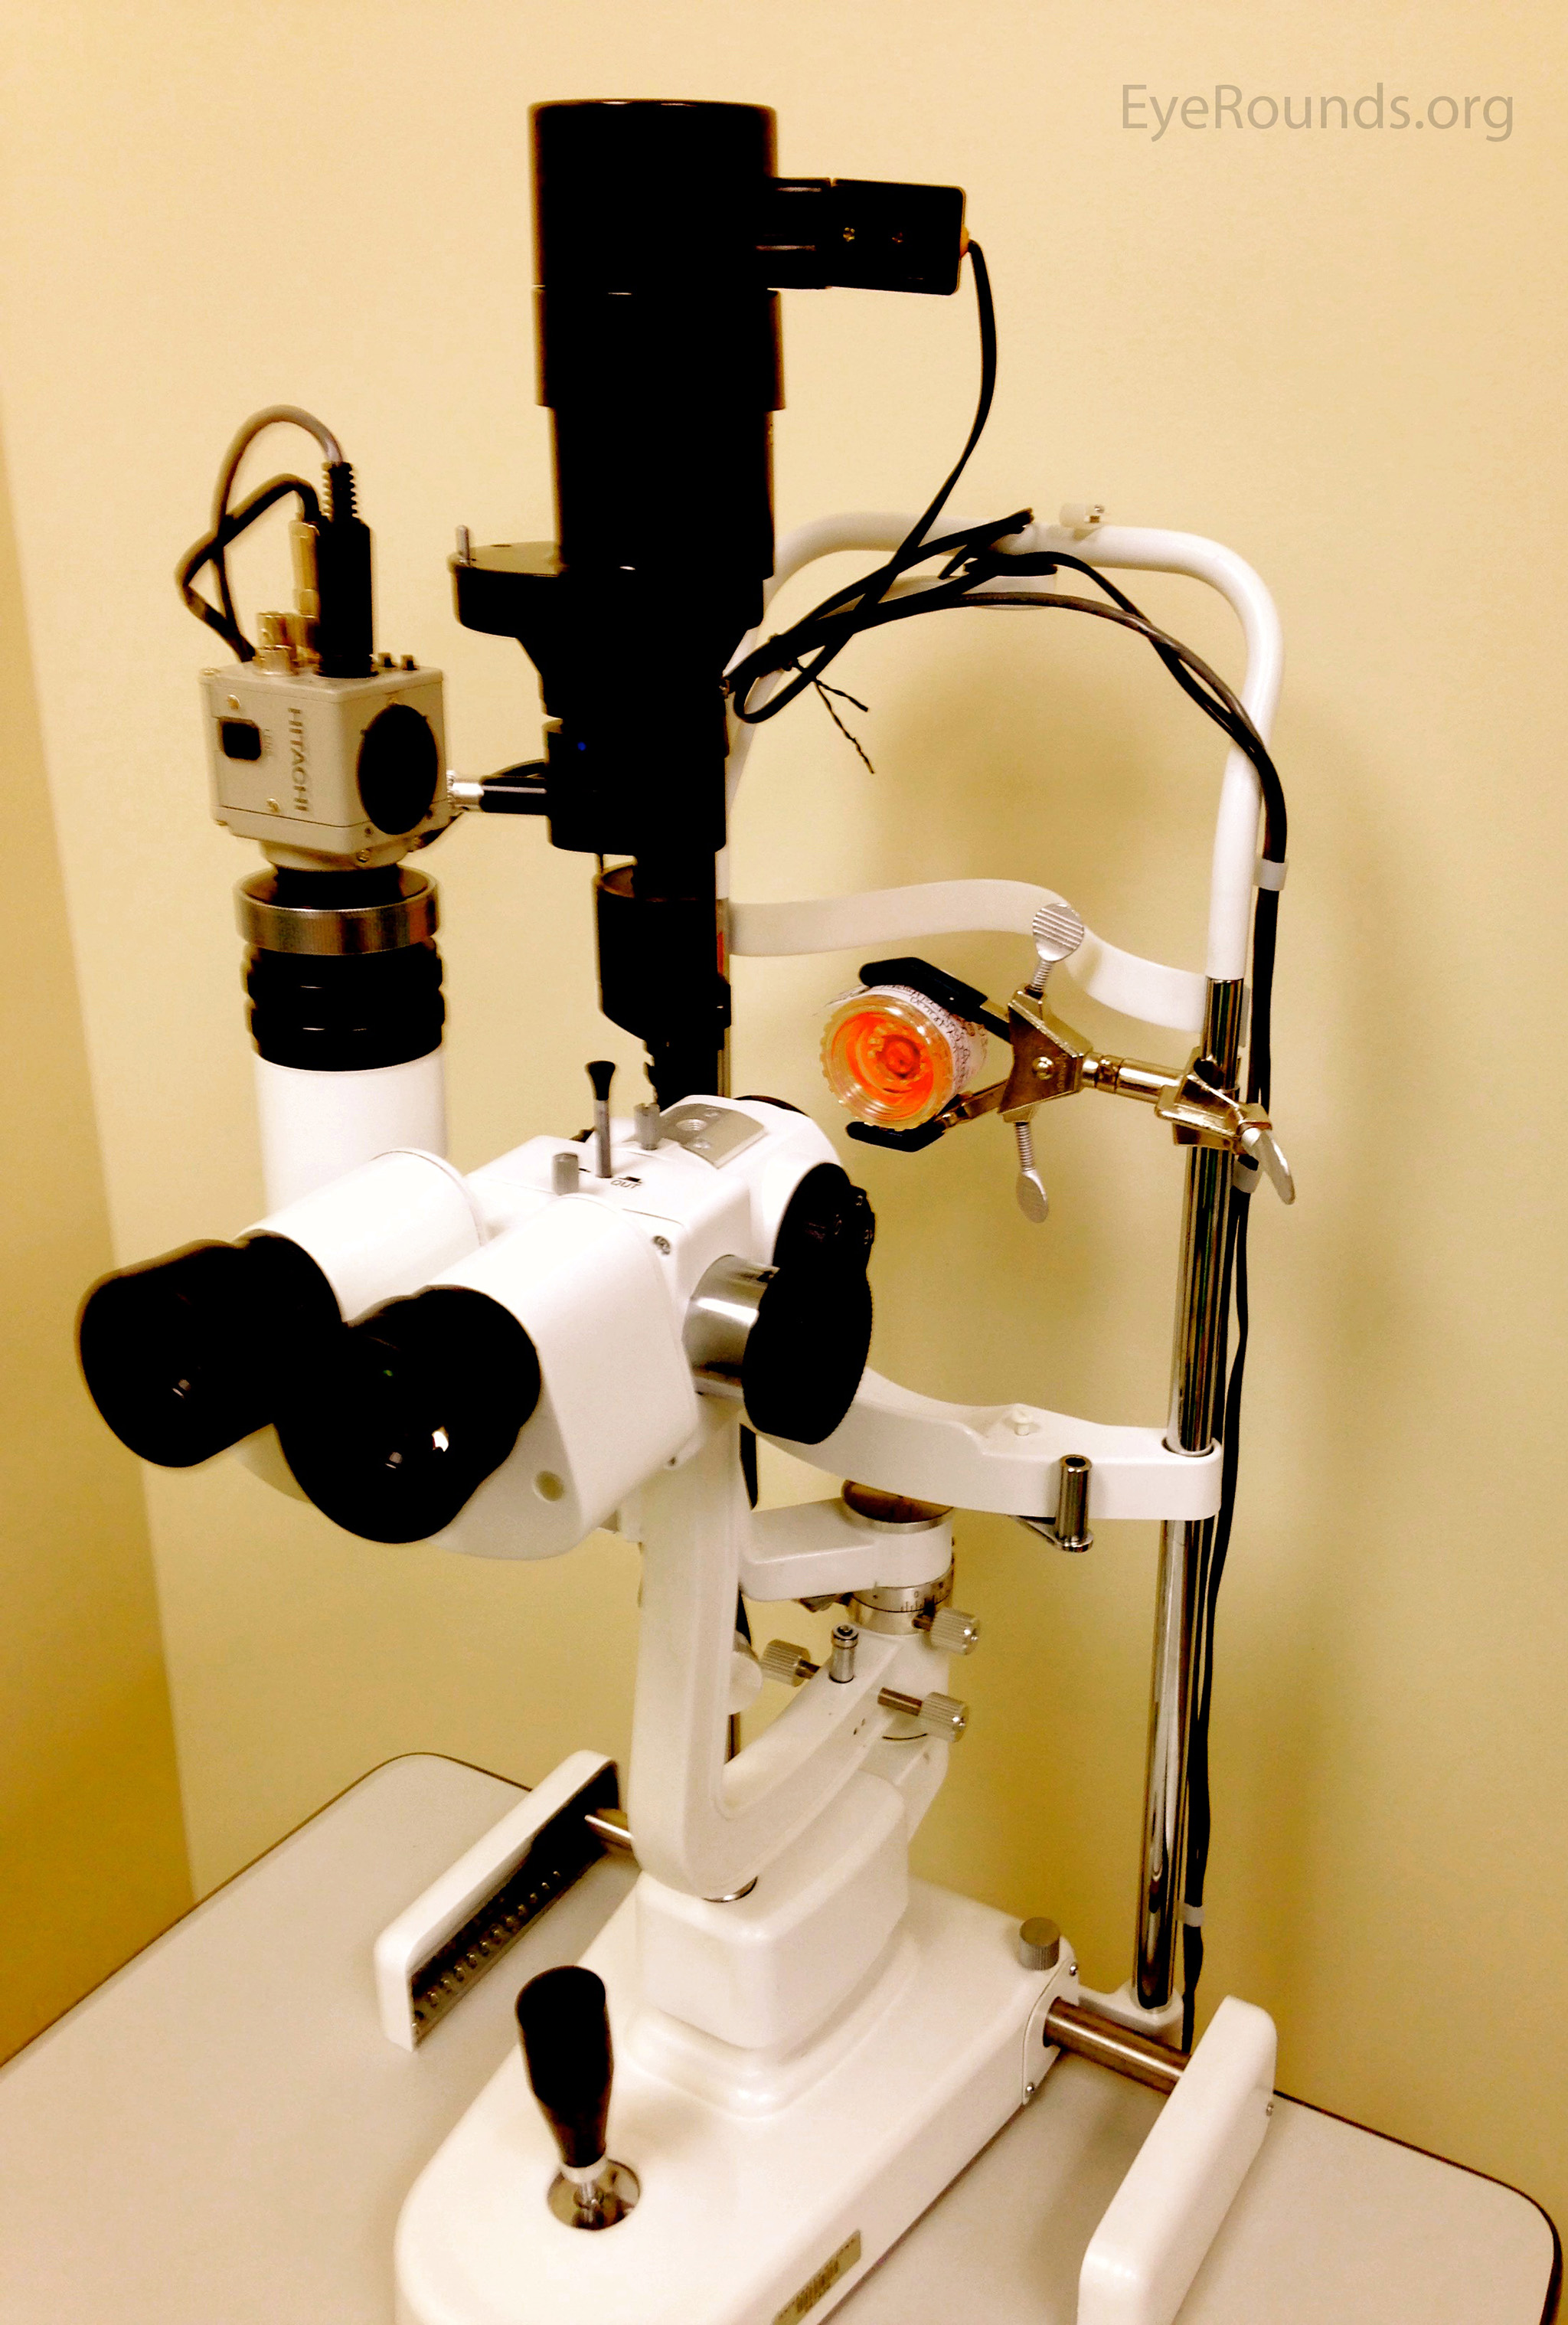 Slit lamp examination of a donor cornea 